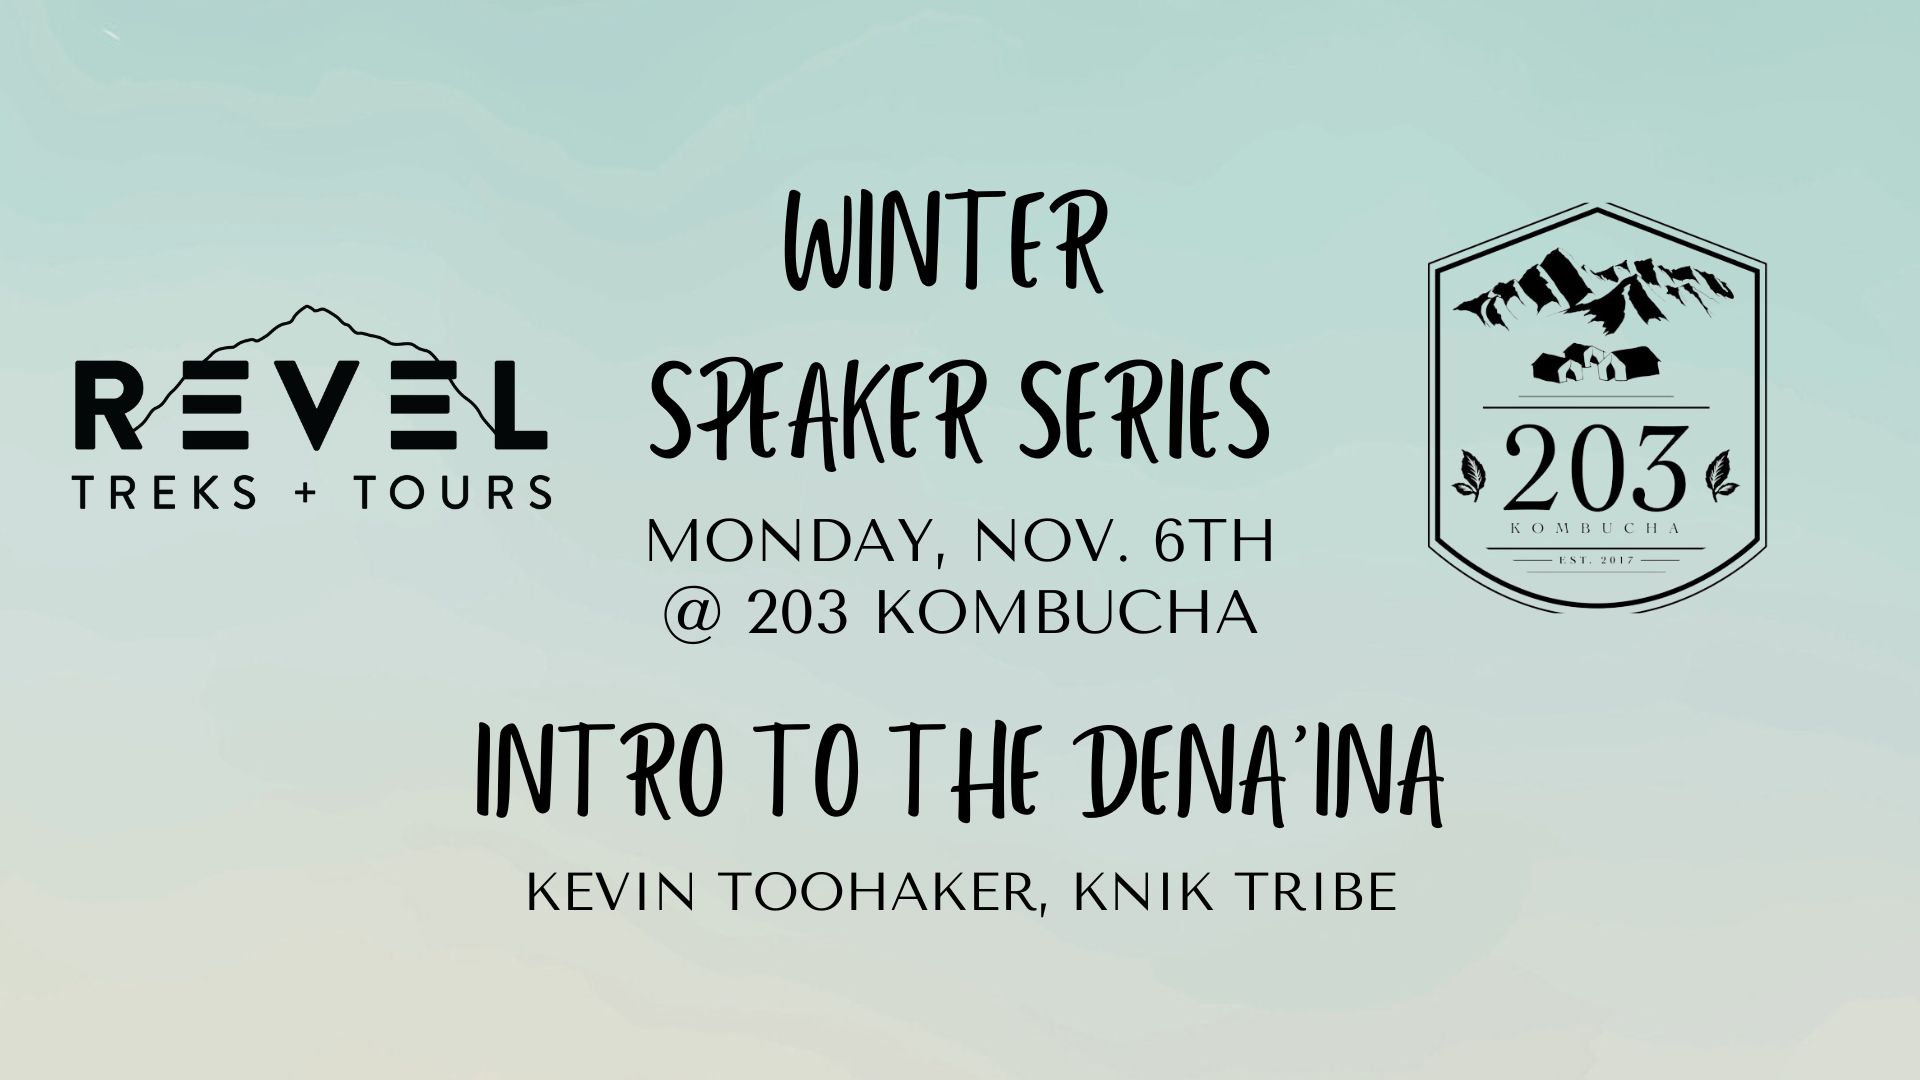 Winter speaker series- Intro to the Dena'ina